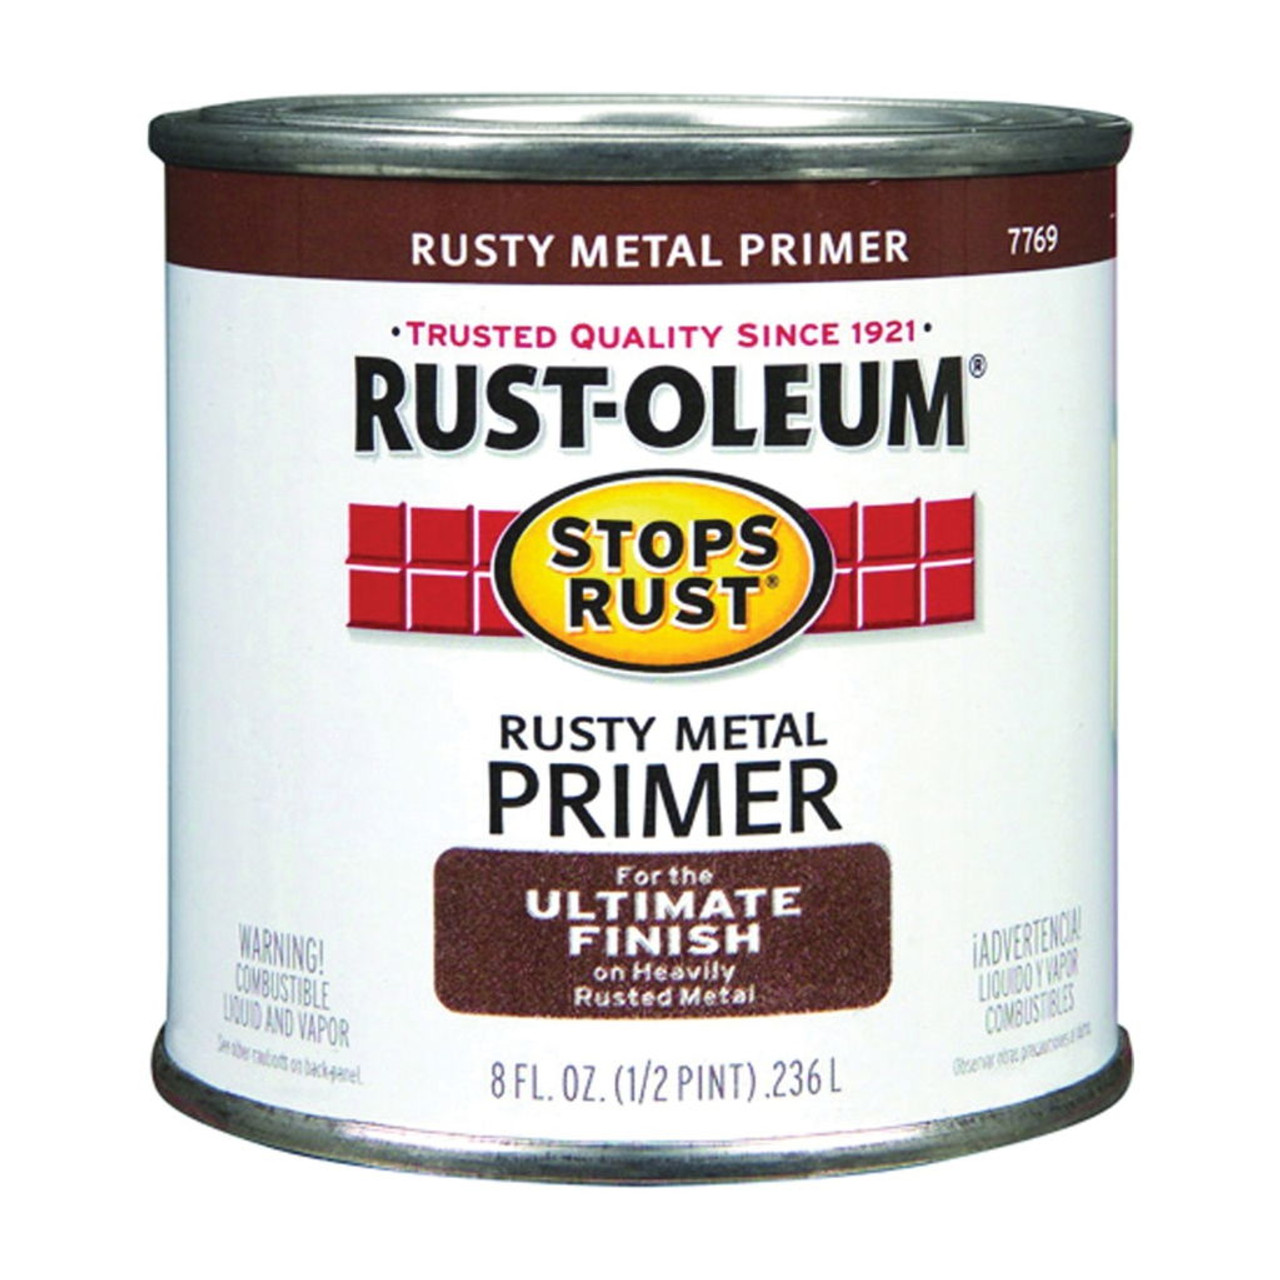 RUST-OLEUM CLEAN METAL FLAT PRIMER SPRAY PAINT W/RUST PROTECTION